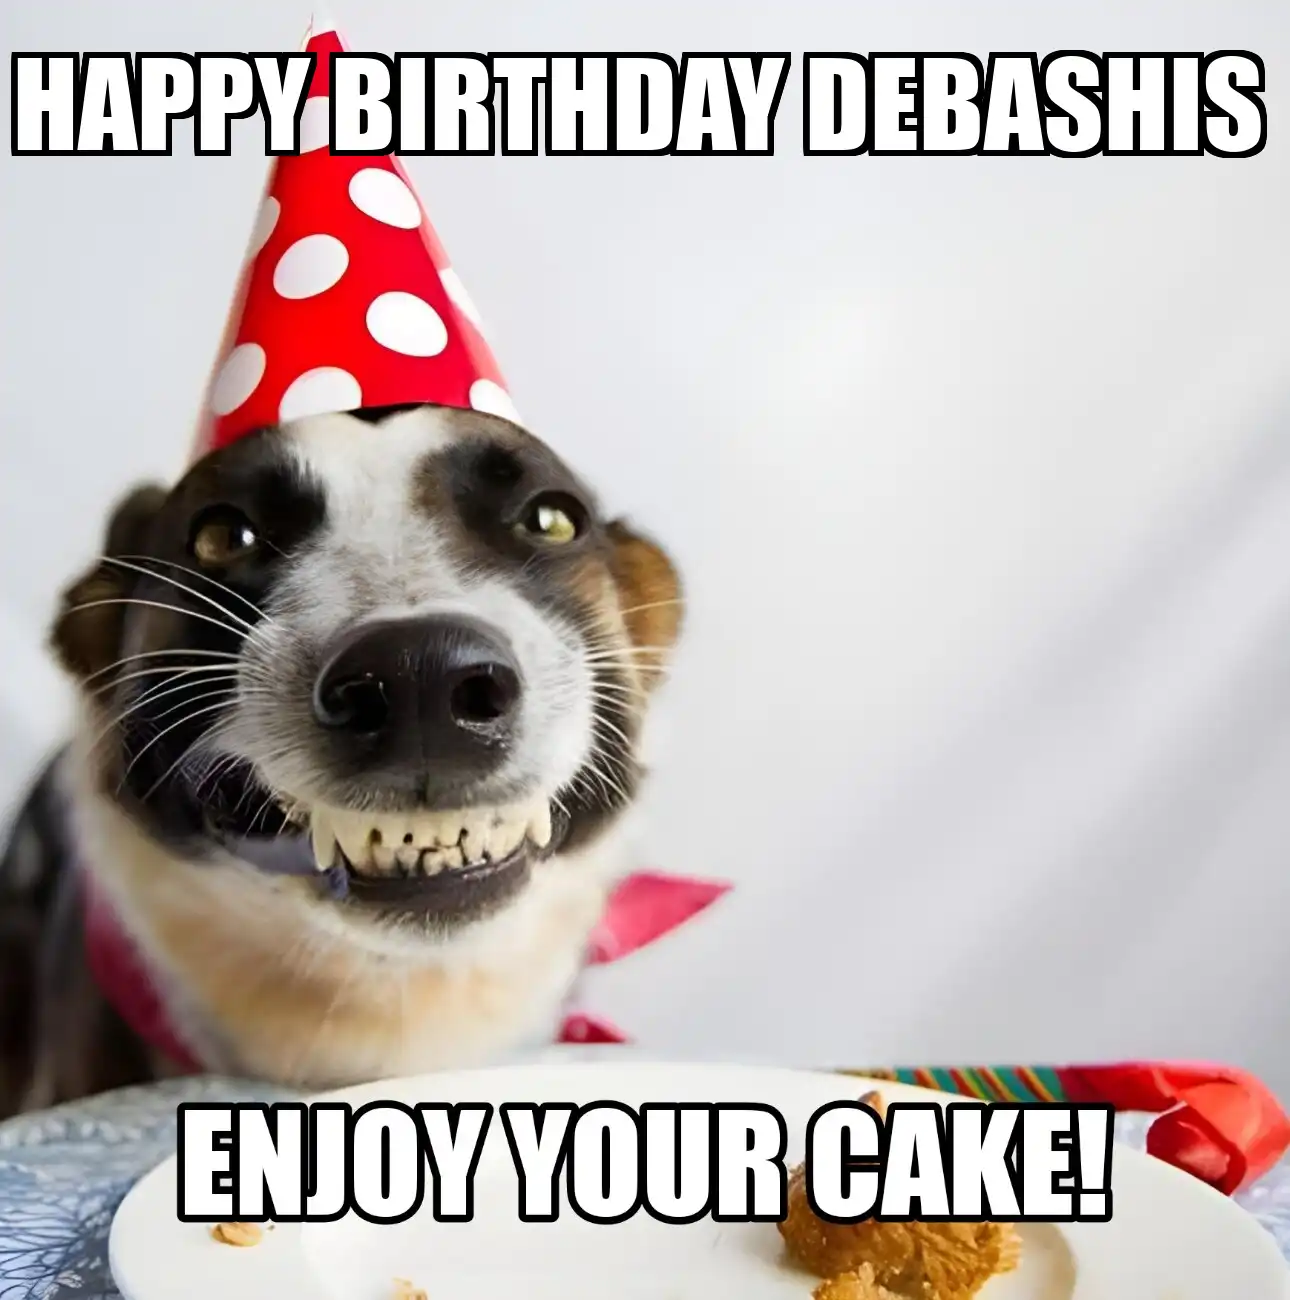 Happy Birthday Debashis Enjoy Your Cake Dog Meme